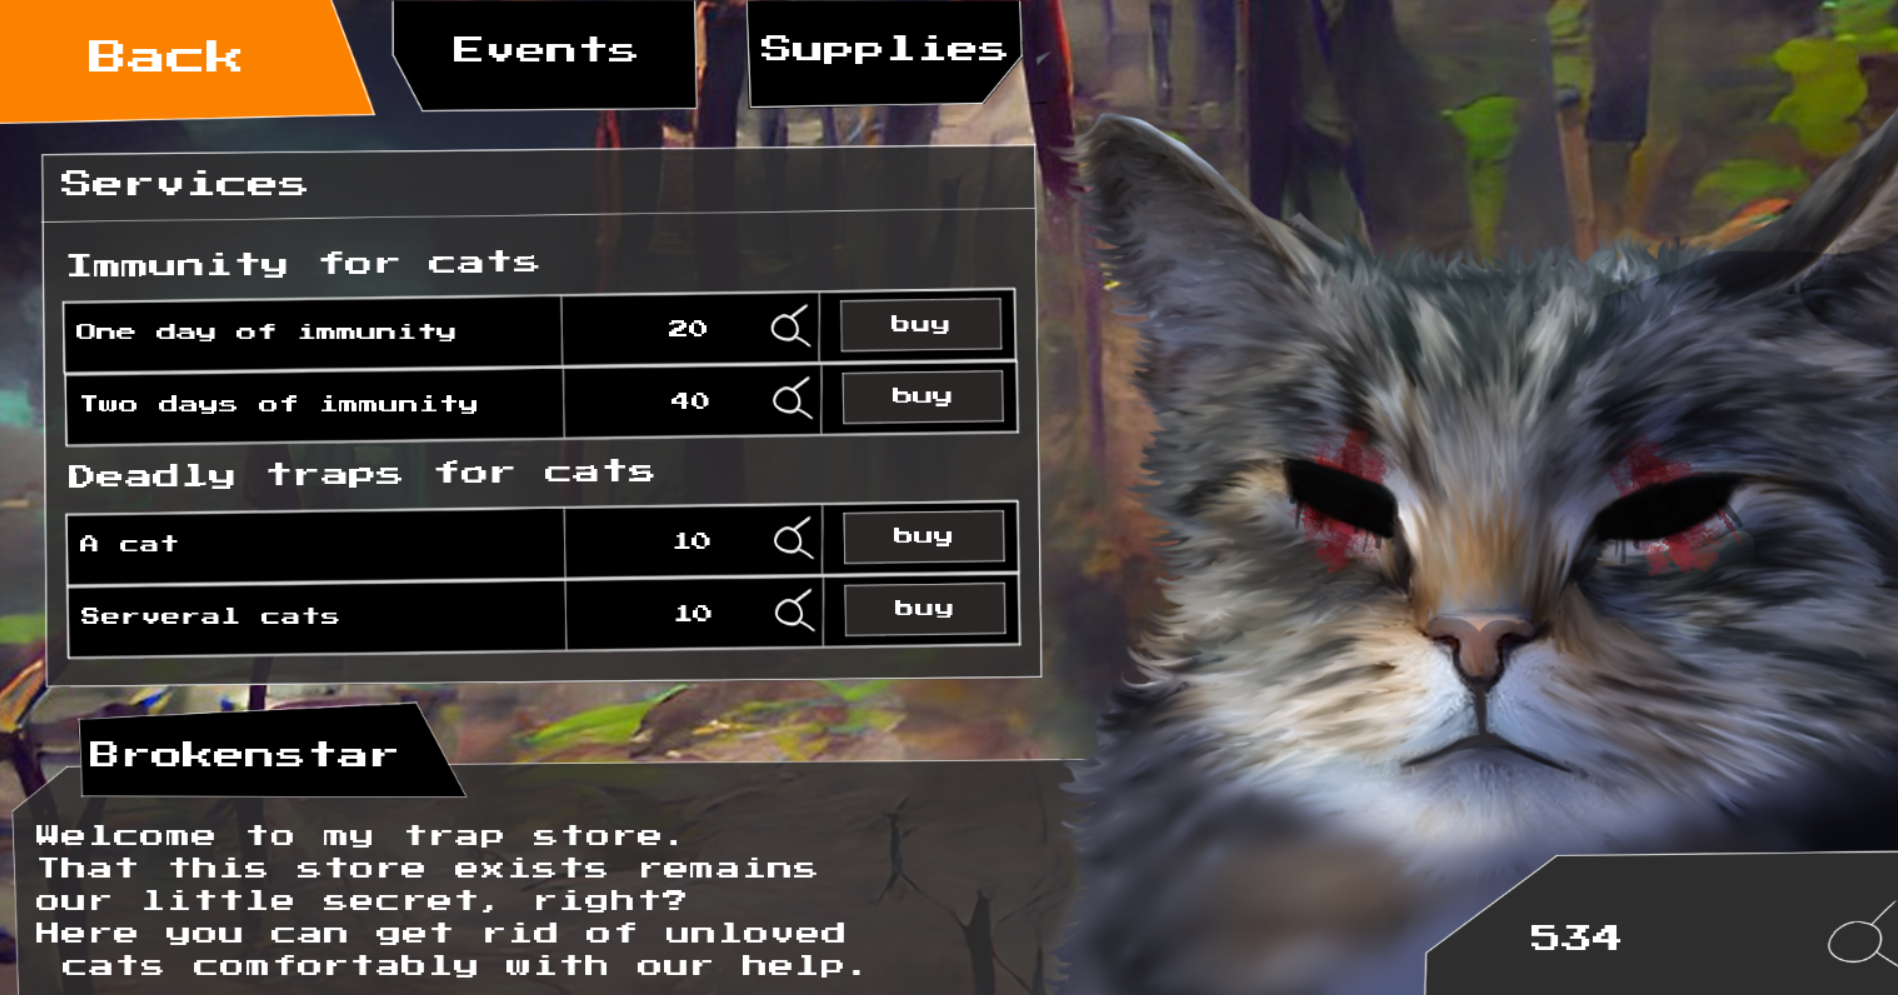 Warrior cats simulator - Play online at